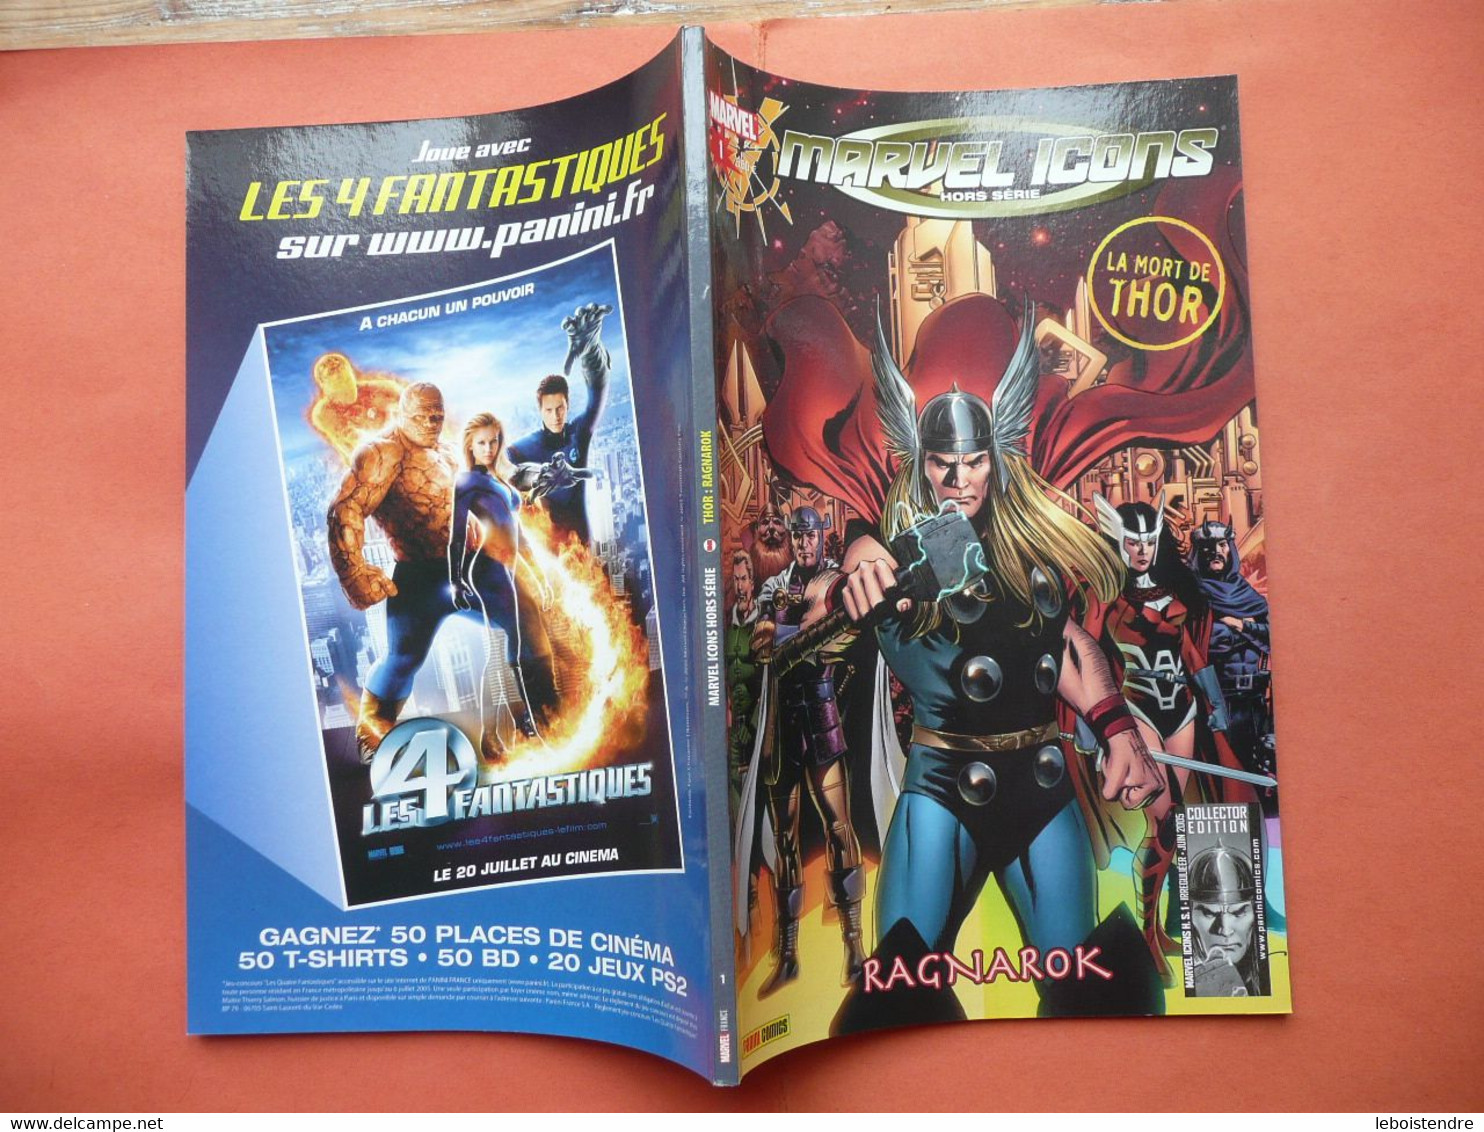 MARVEL ICONS HORS SERIE N 1 JUIN 2005 THOR : RAGNAROK MARVEL COLLECTOR EDITION PANINI COMICS TRES BON ETAT - Marvel France